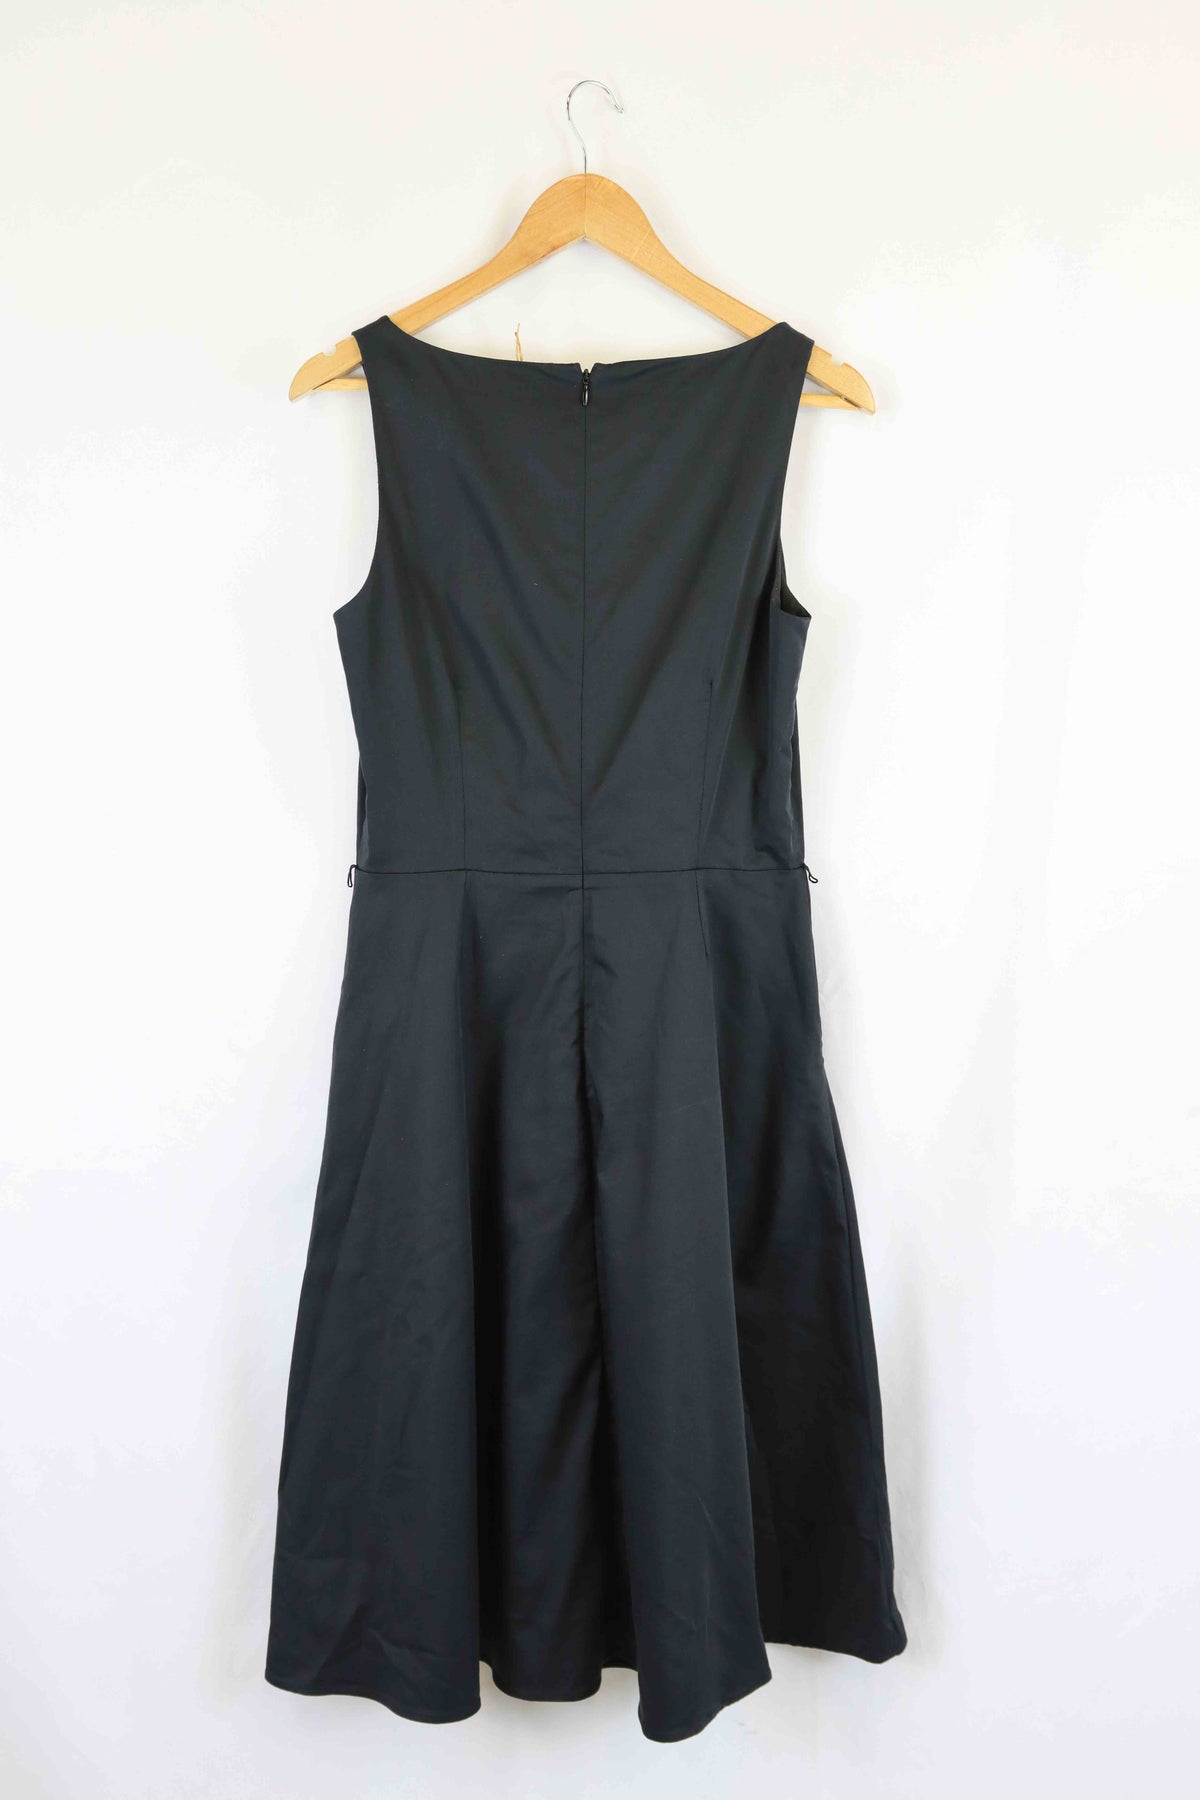 Marcs Black Dress 10